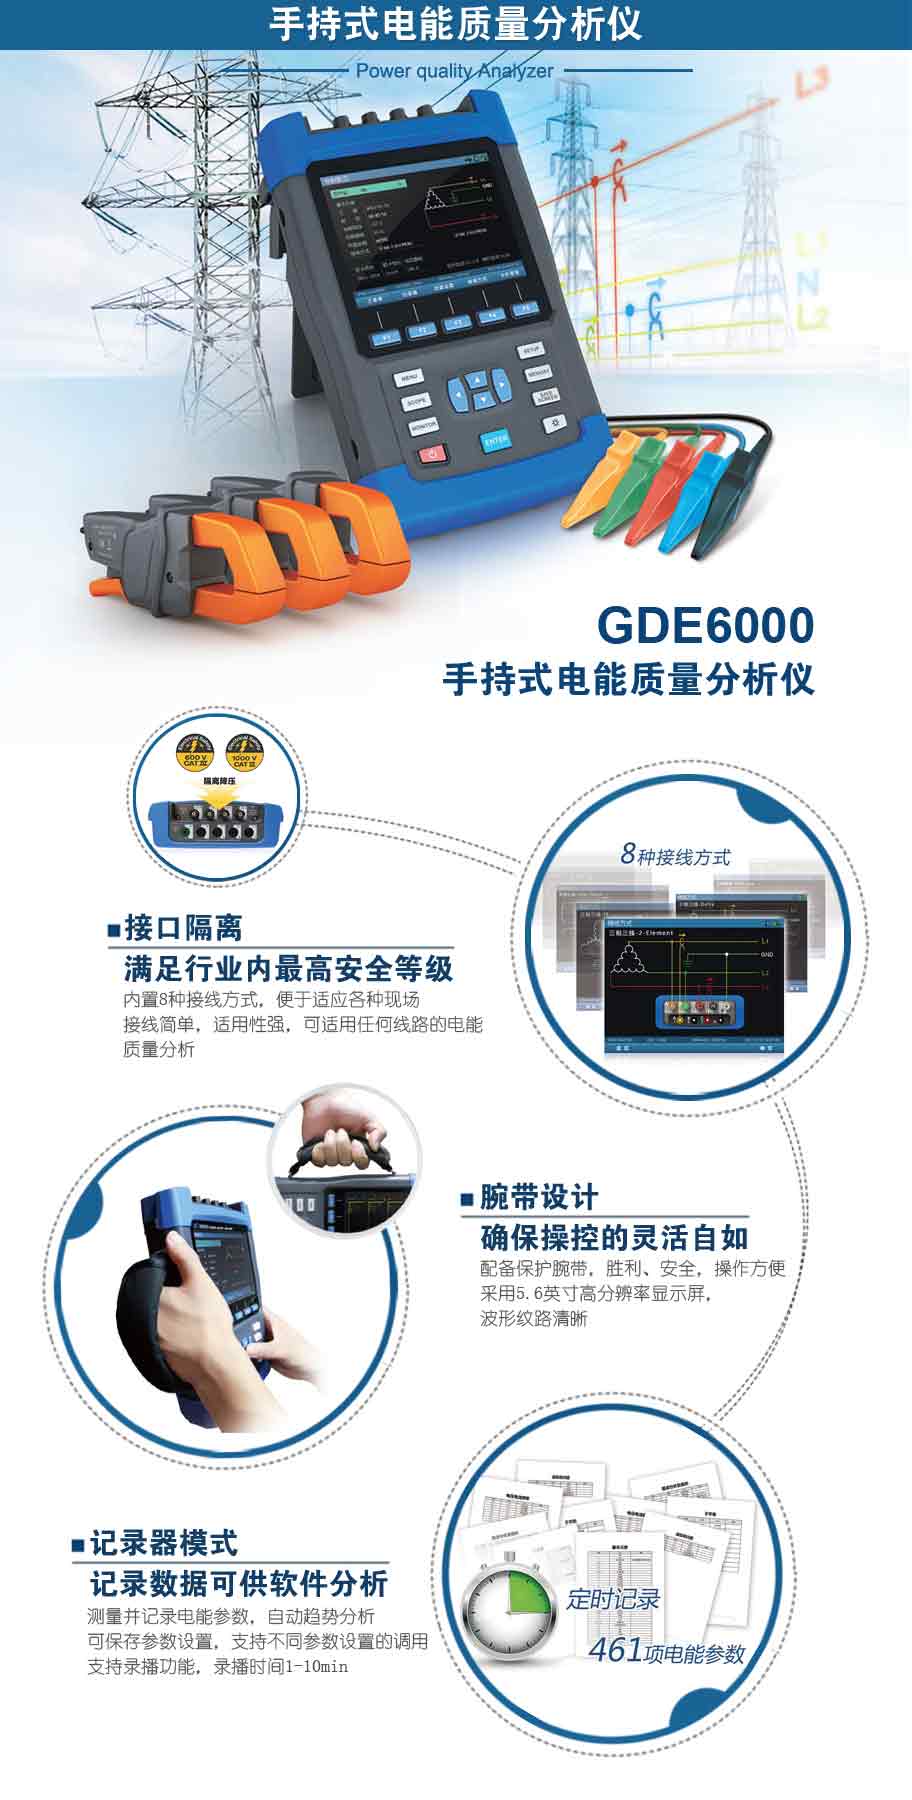 GDE6000 手持式电能质量分析仪